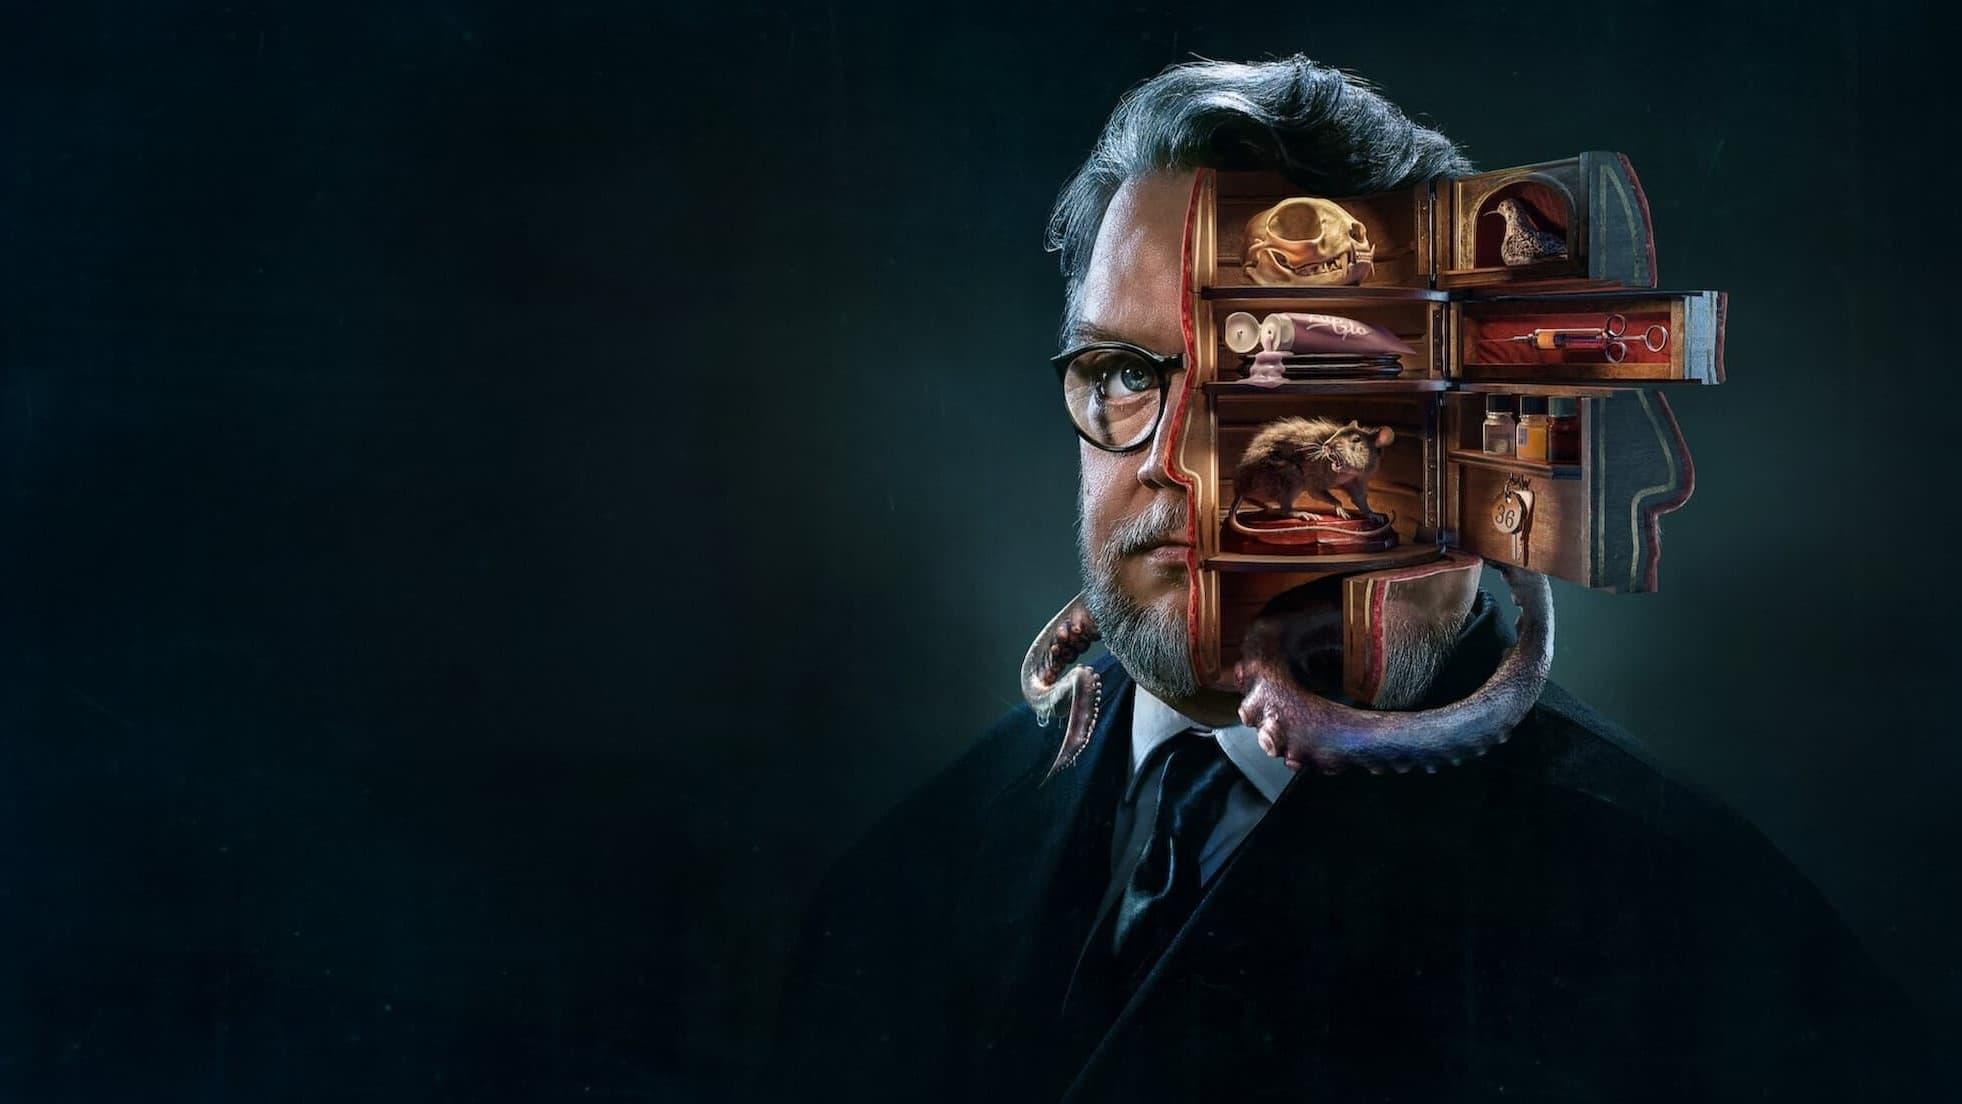 Guillermo del Toro's Cabinet of Curiosities backdrop